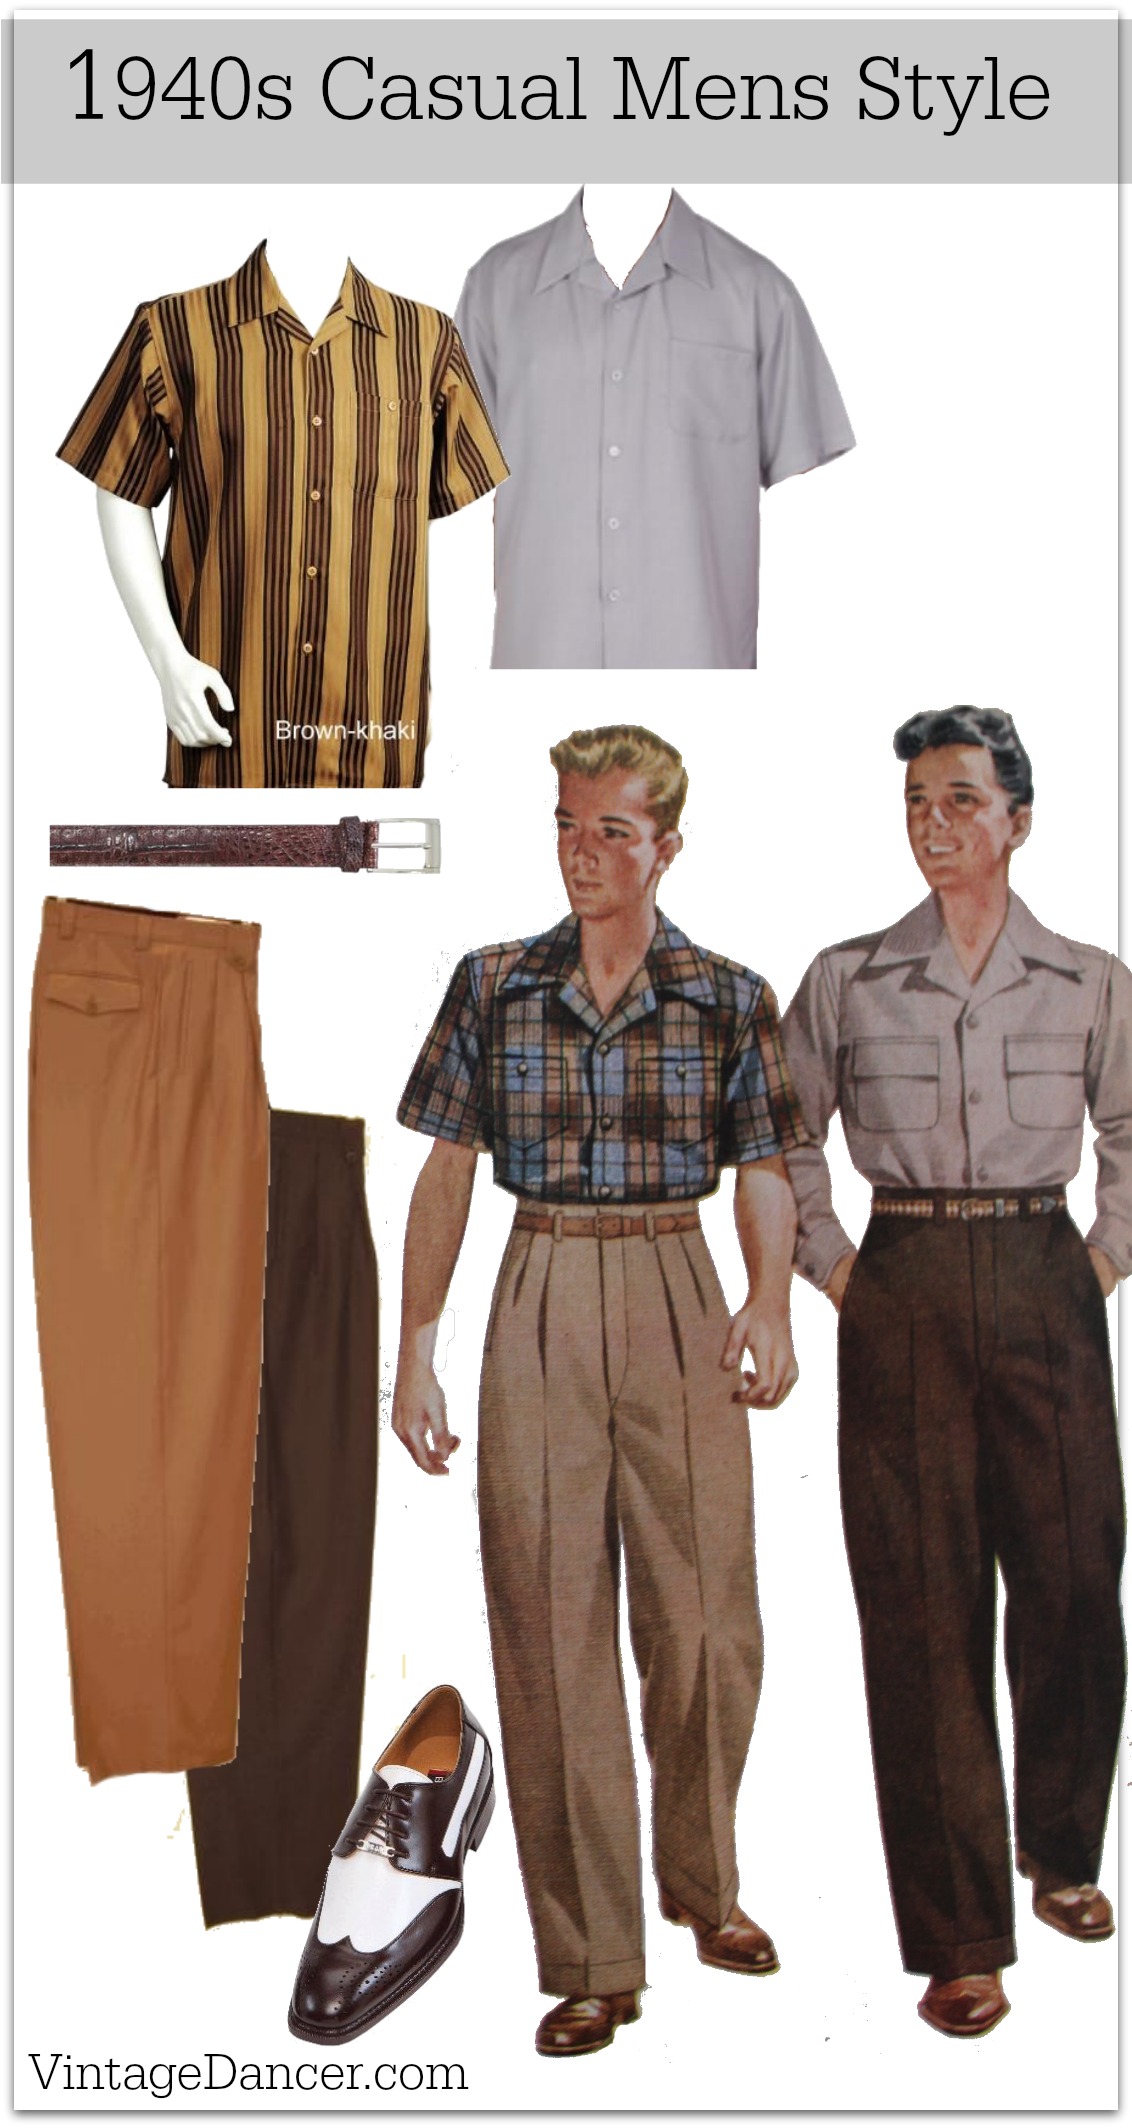 1940s Men's Fashion Trends